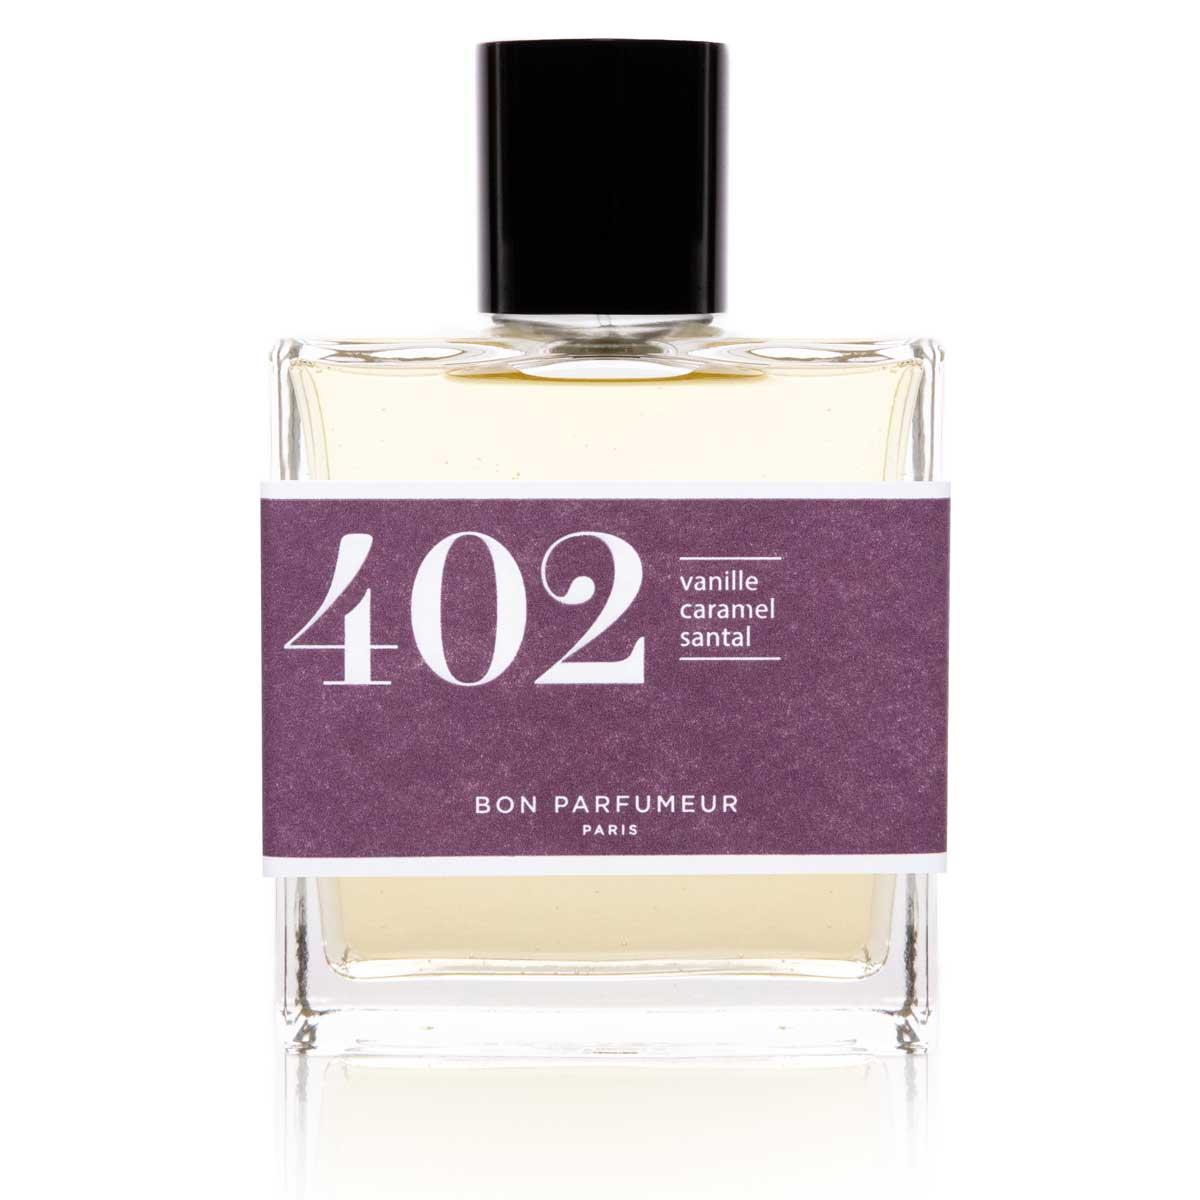 Bon Parfumeur 402 Vanilla Toffee Sandalwood Eau de Parfum 100ml ...